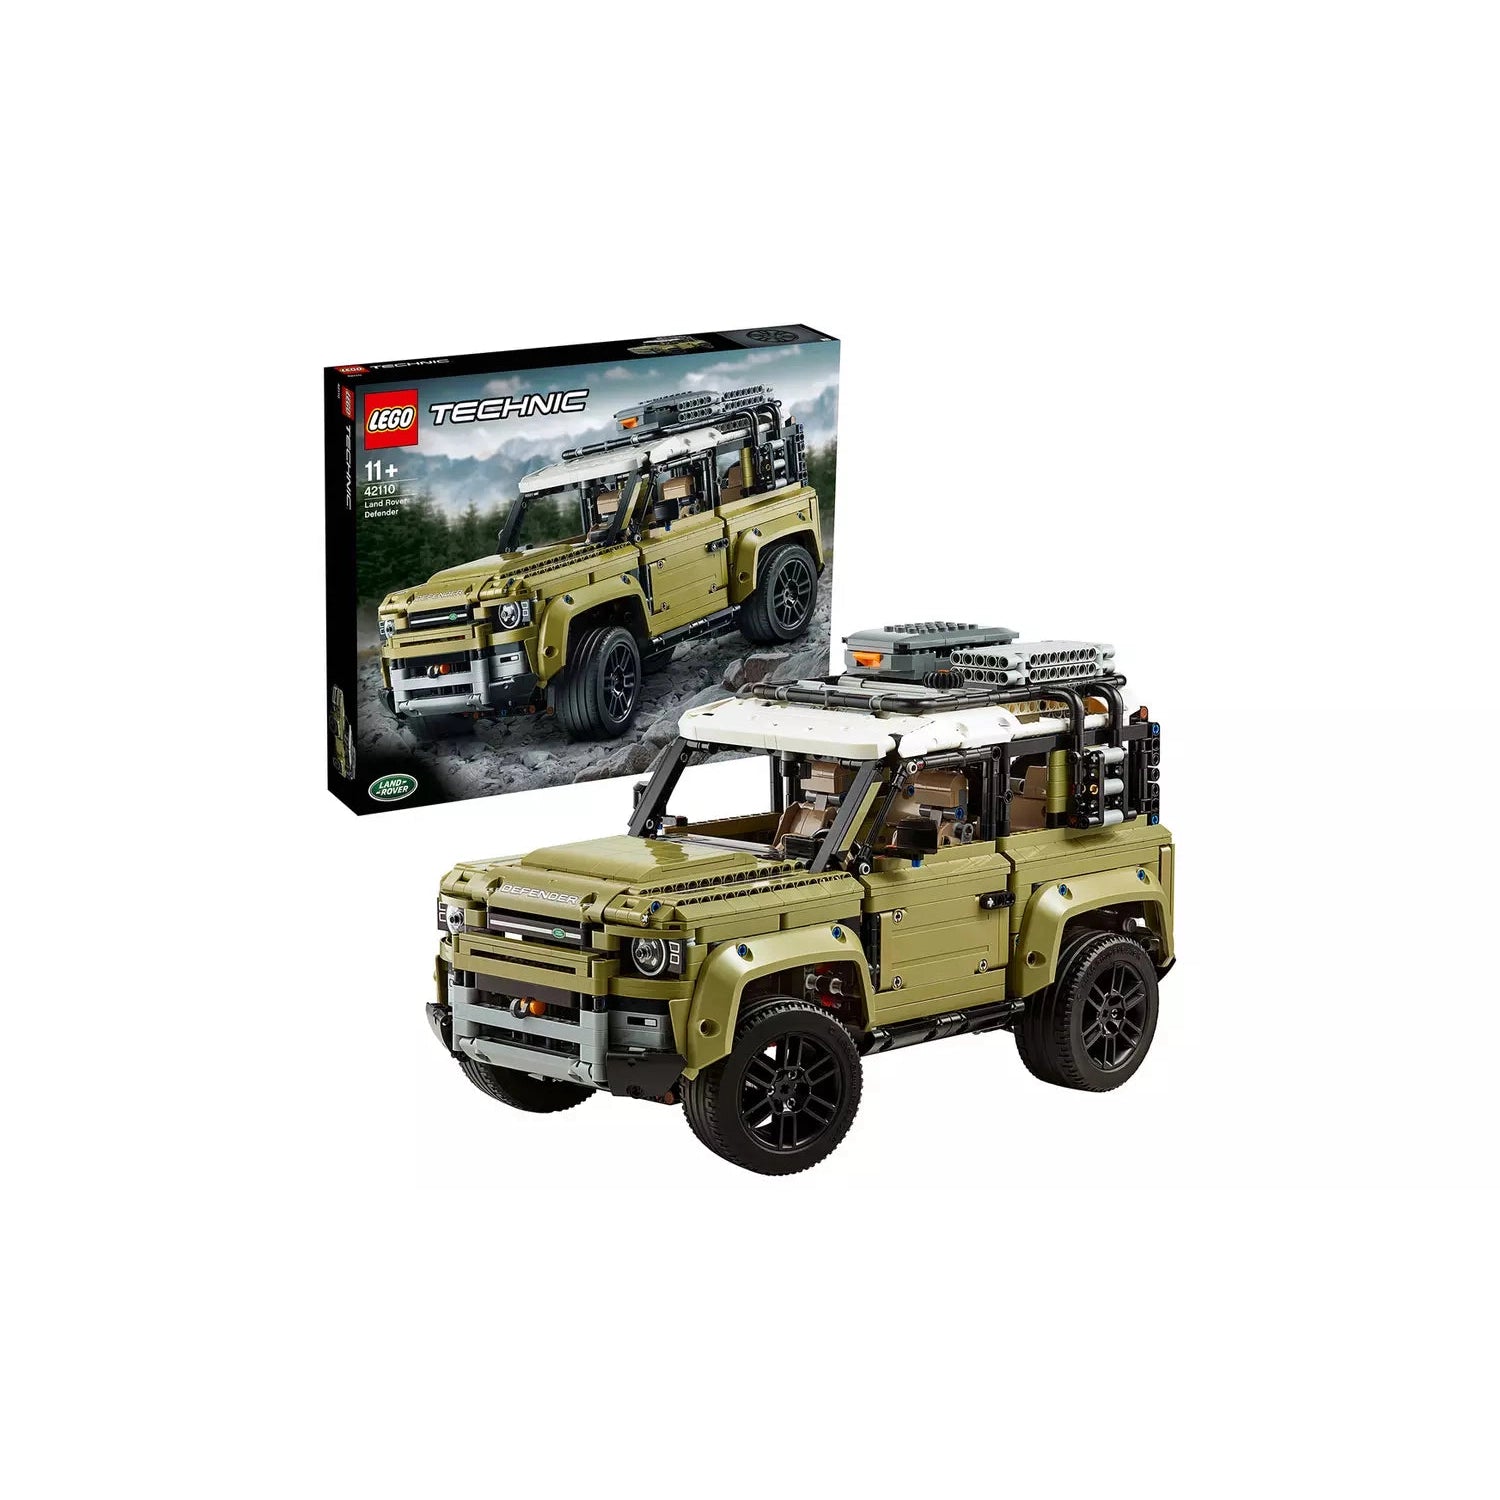 Lego 42110 Technic Land Rover Defender Collector's Model Car